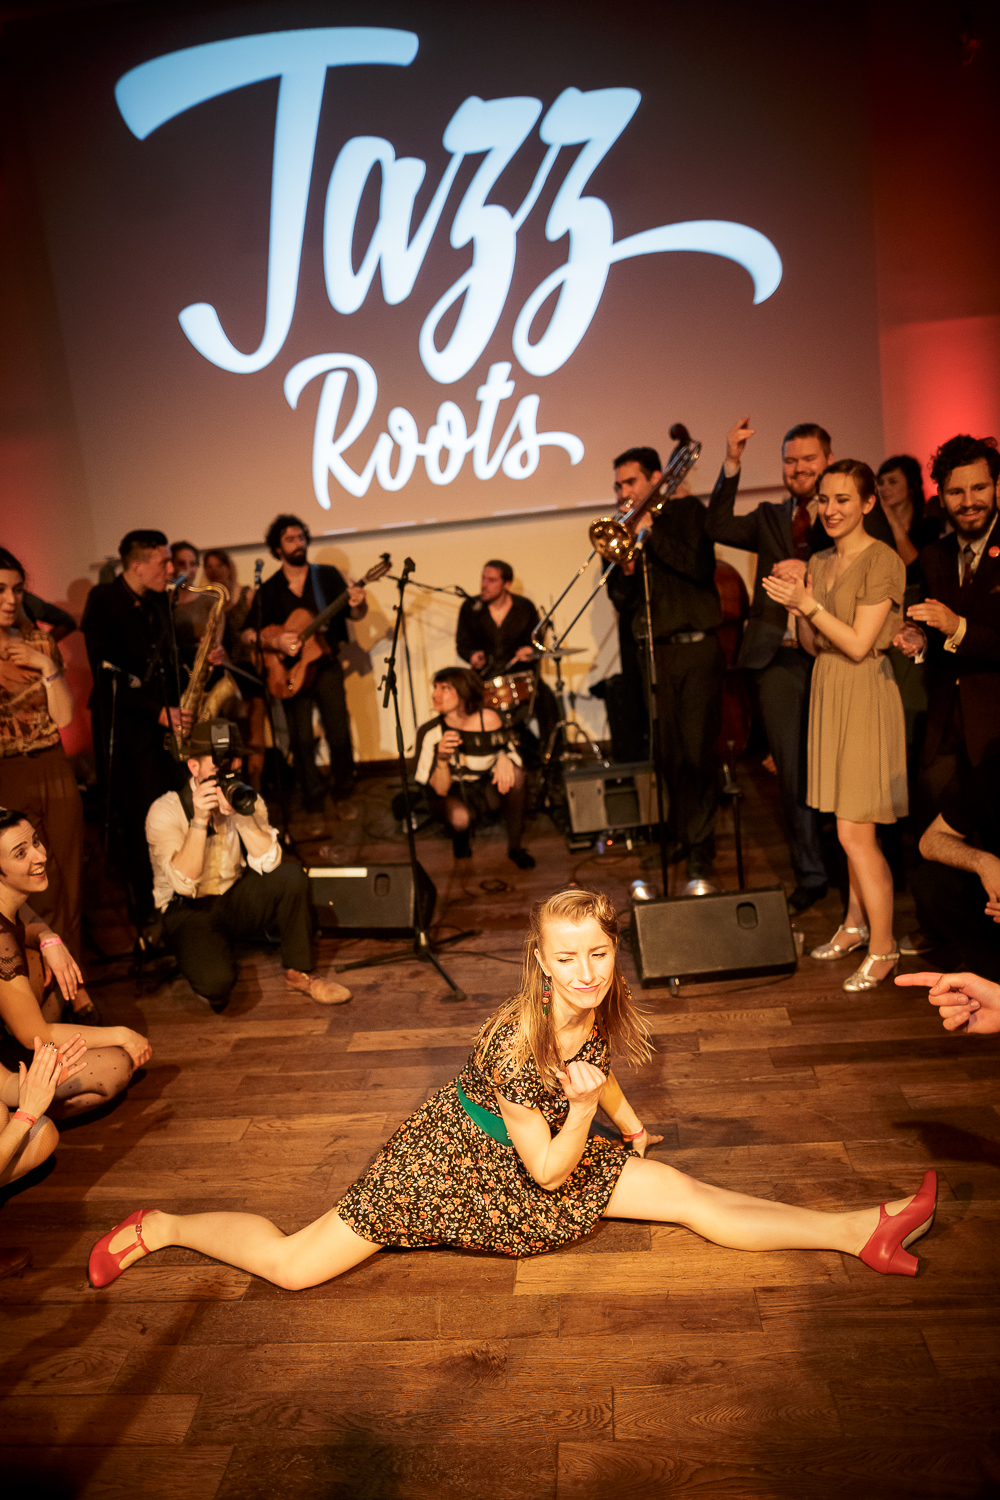  Paris Jazz Roots Festival 2015 - http://www.ebobrie.com/paris-jazz-roots-festival/ - https://www.facebook.com/photosForDancersOnly 